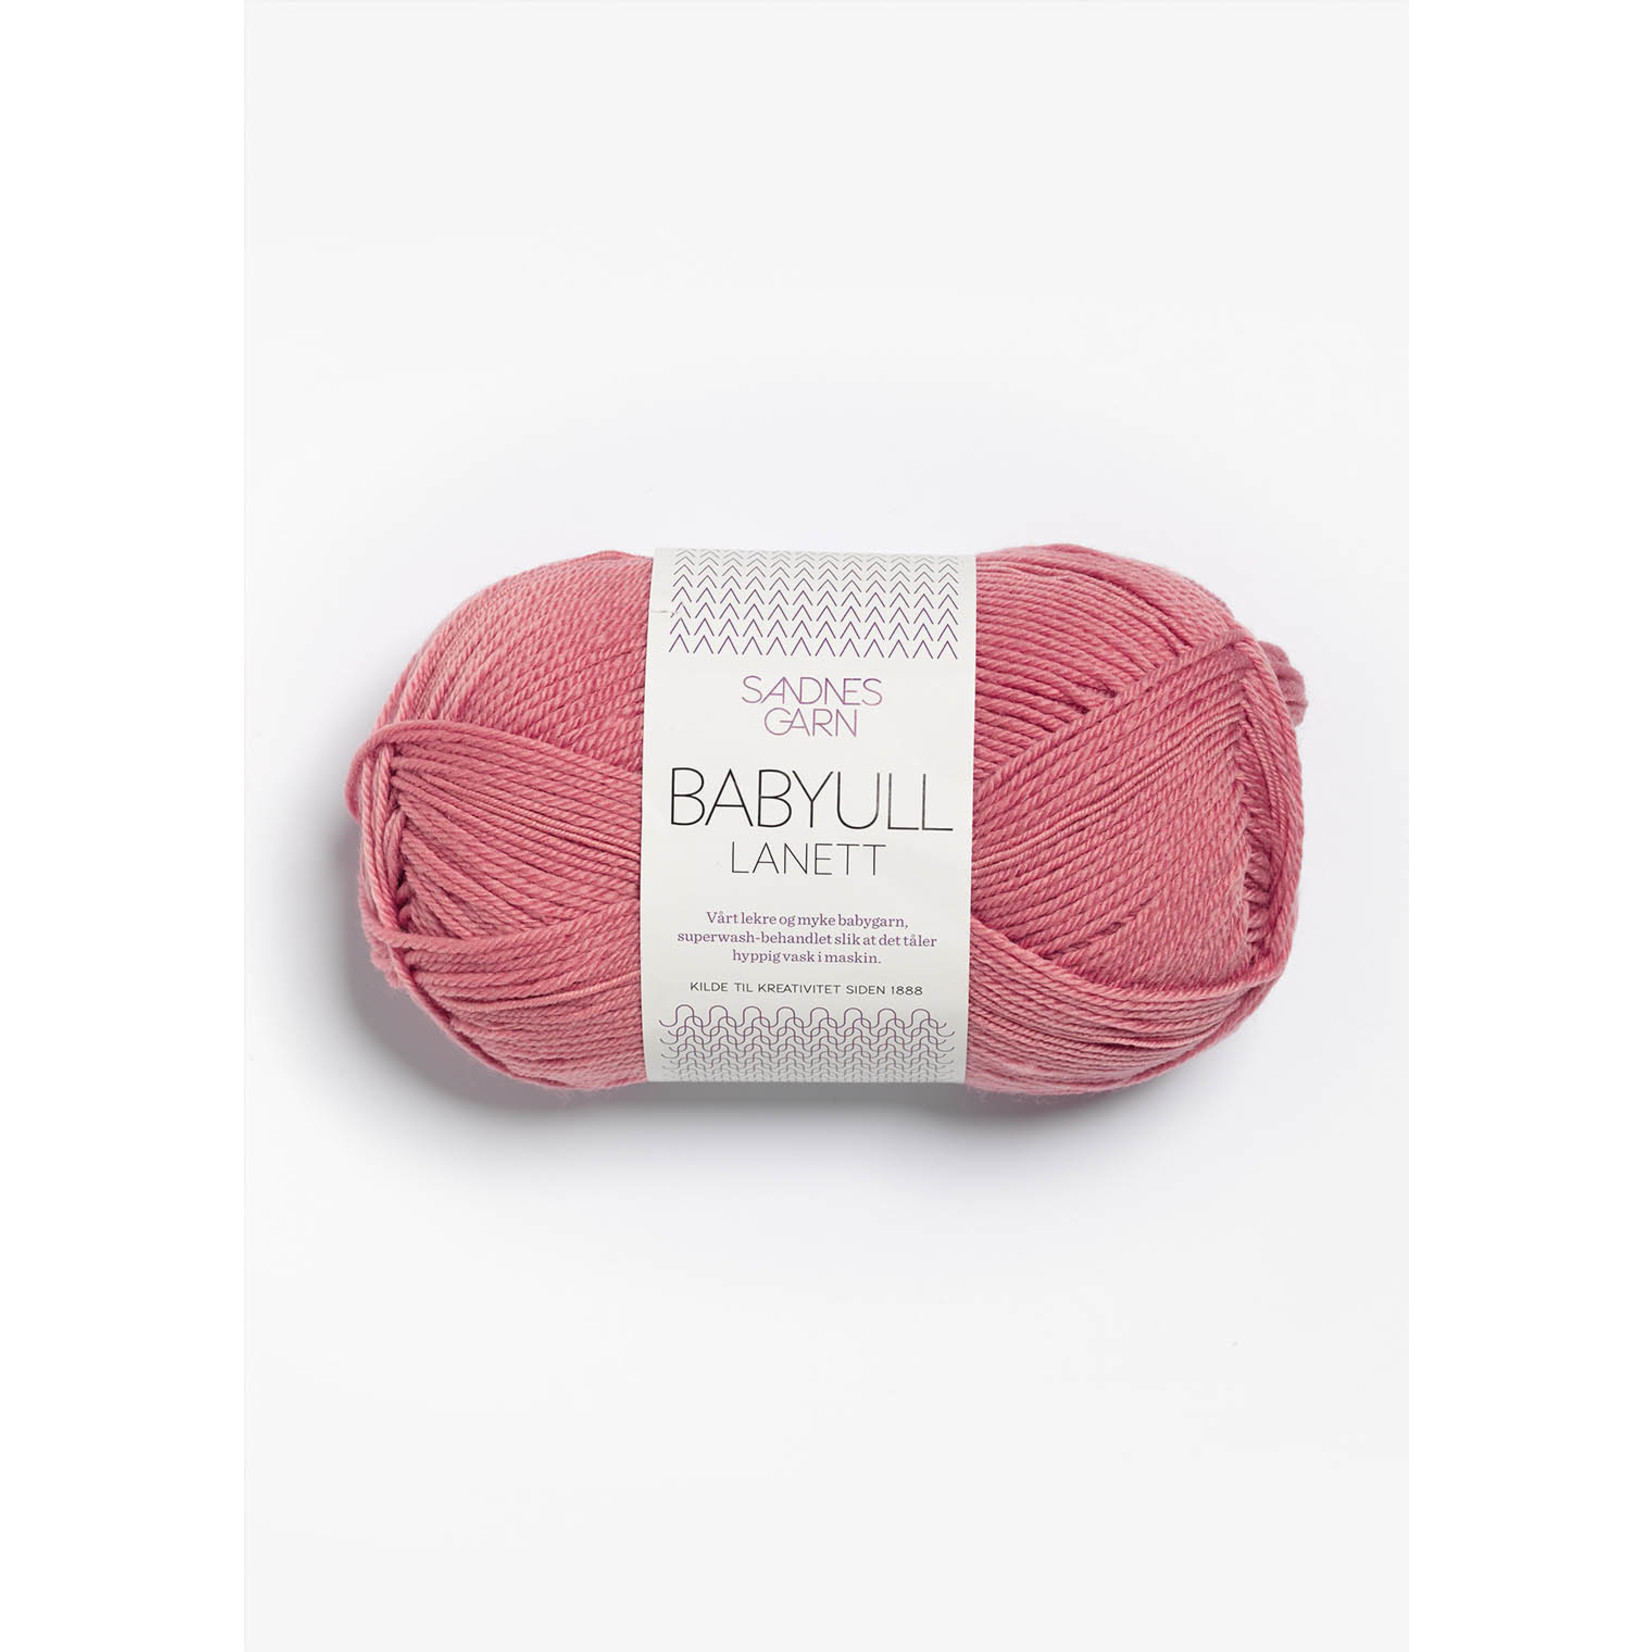 Sandnes Garn Babyull Lanett, 4023, Dusty Old Pink